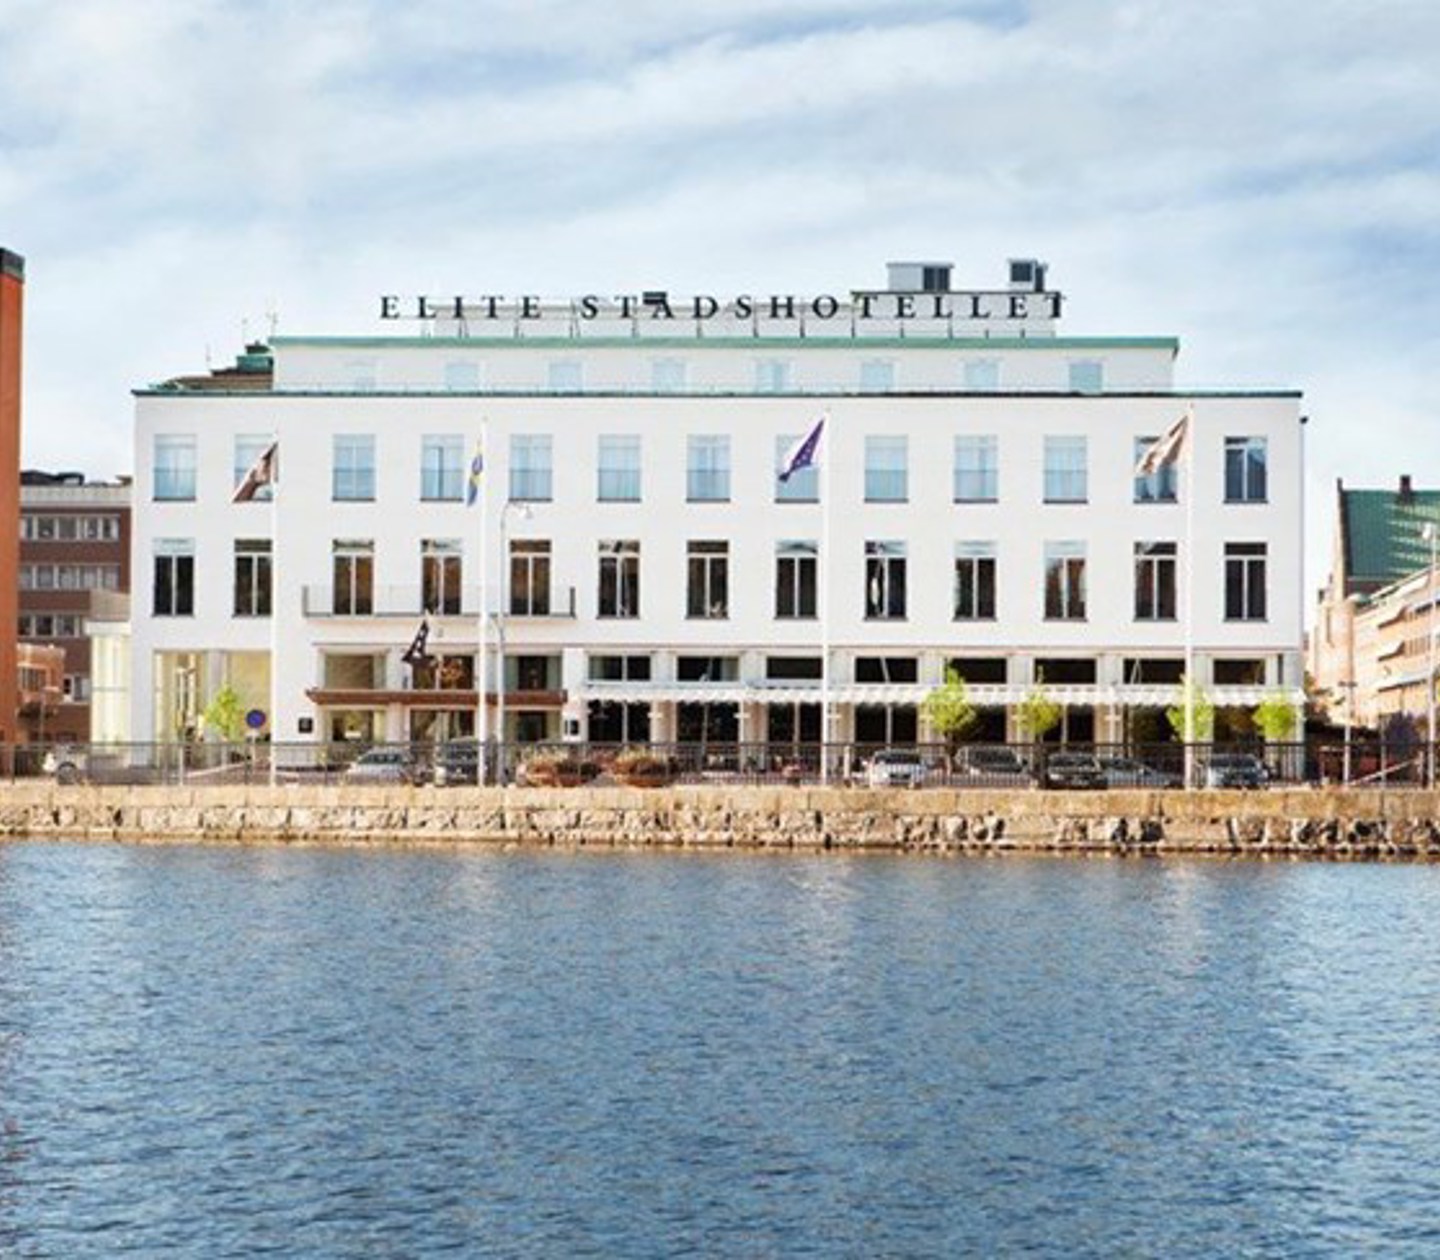 Bild på Elite stadshotell i Eskilstuna.